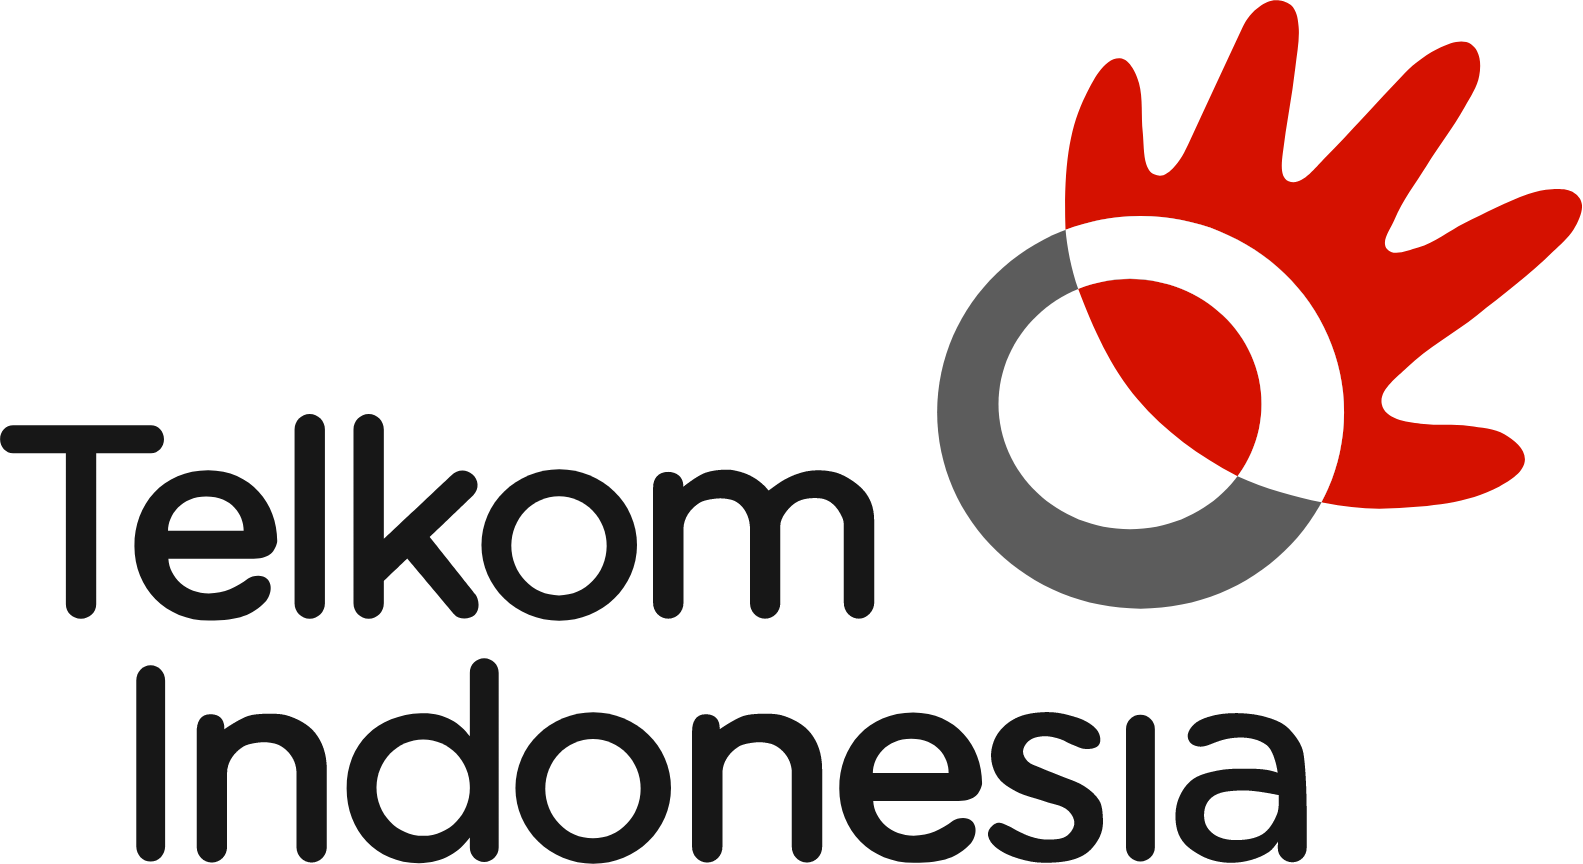 Telkom Indonesia It companies in Indonesia